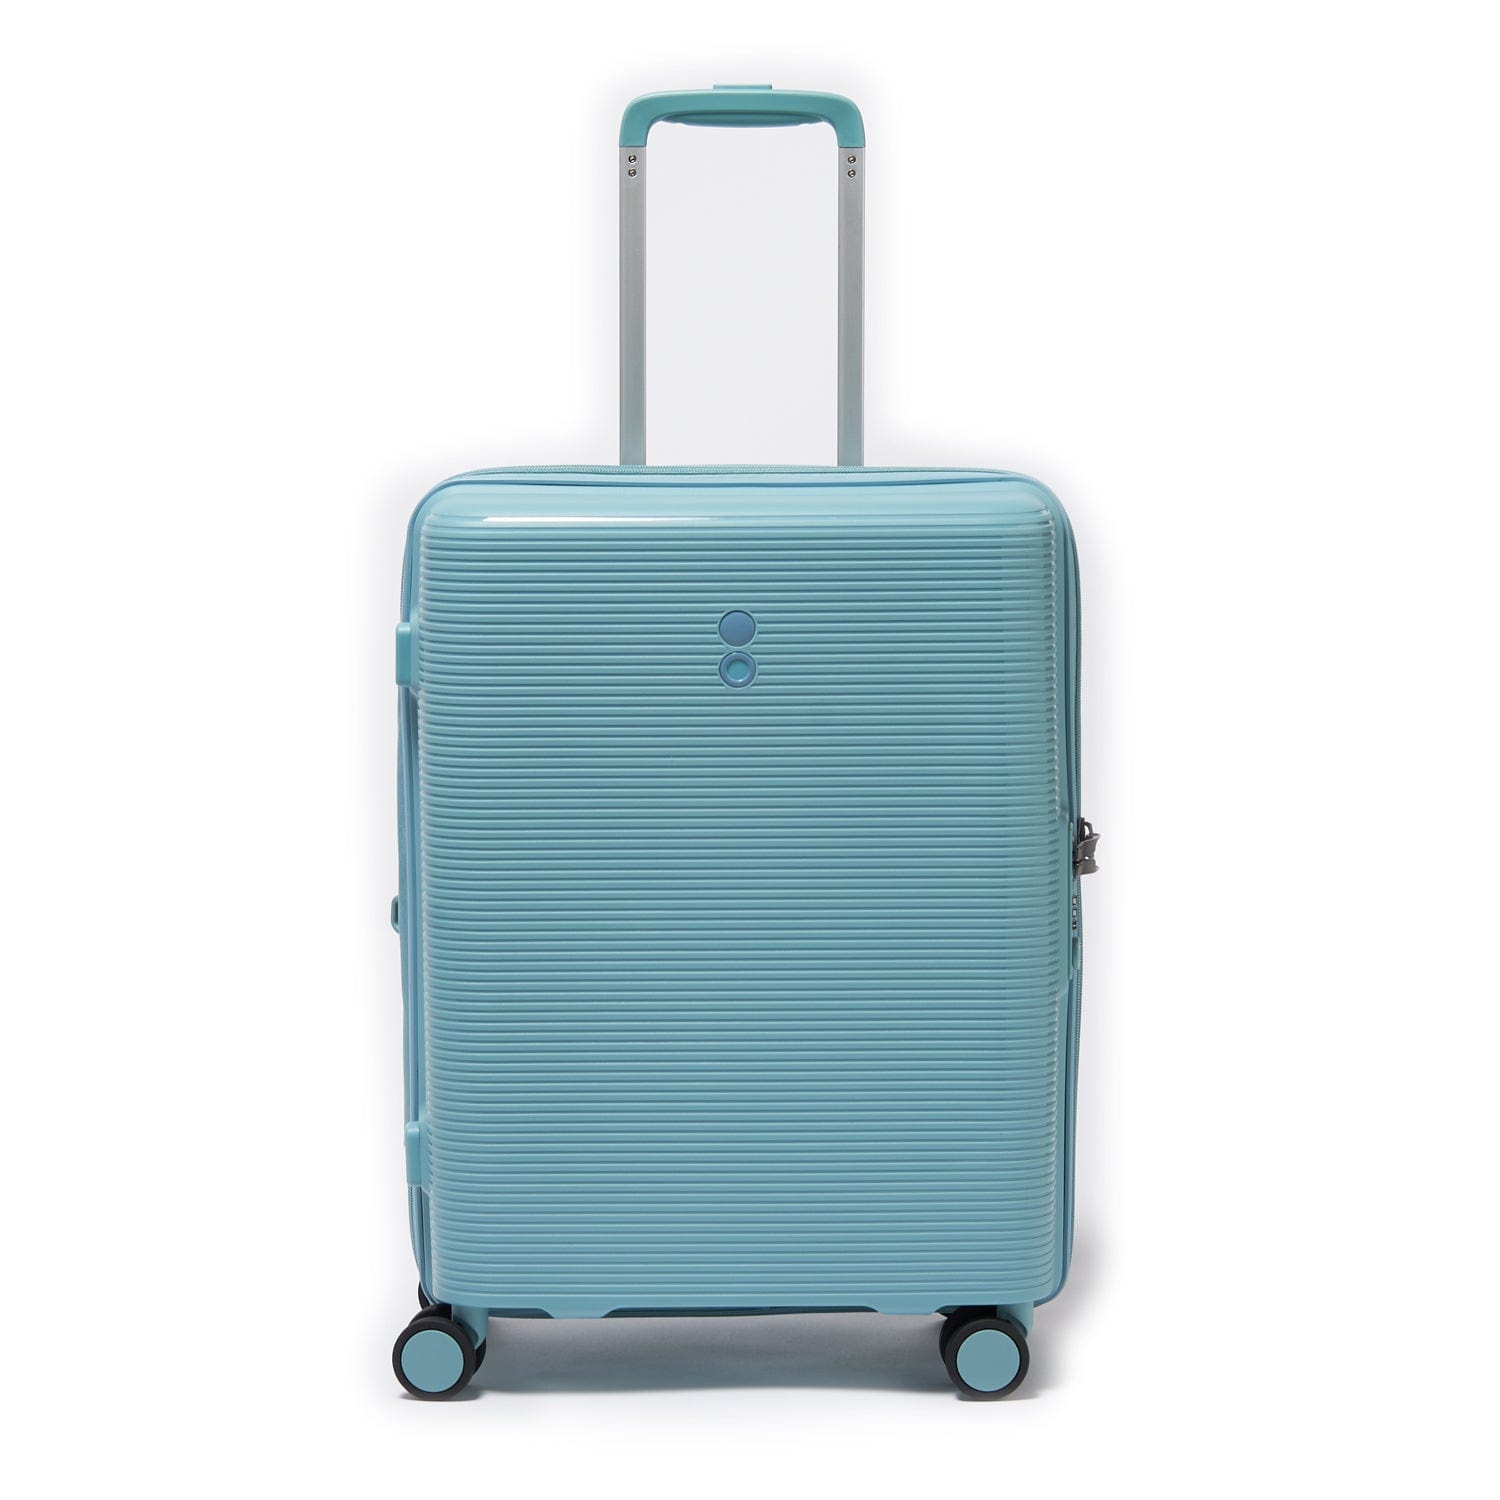 Echolac Pusion 55cm Hardcase Expandable 4 Double Wheel Cabin Luggage Trolley Blue - PW005 20 Blue